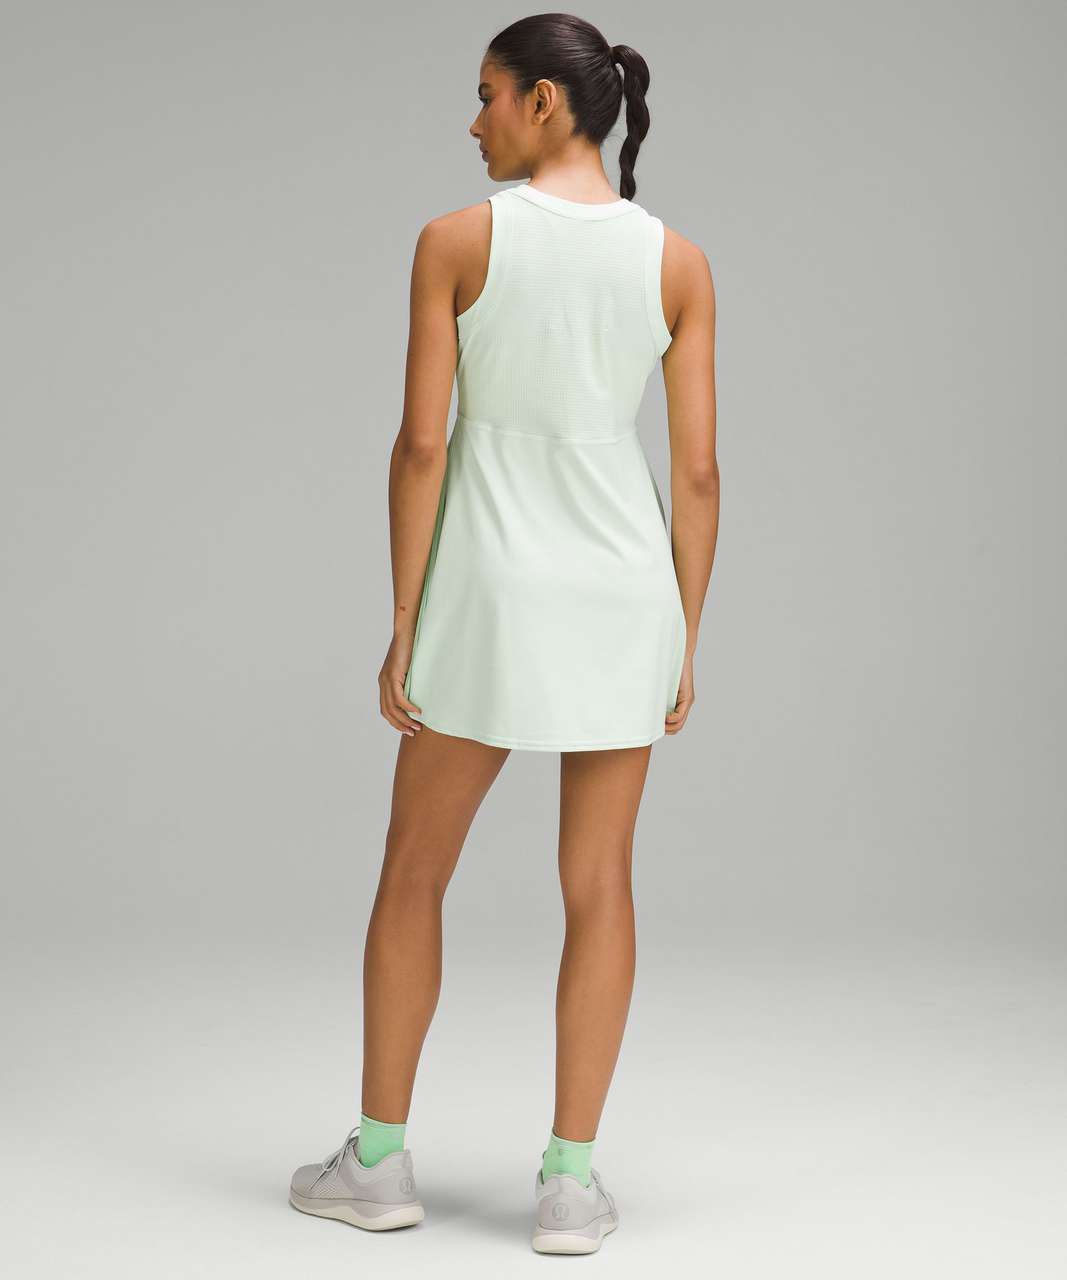 Lululemon Grid-Texture Sleeveless Tennis Dress - Kohlrabi Green